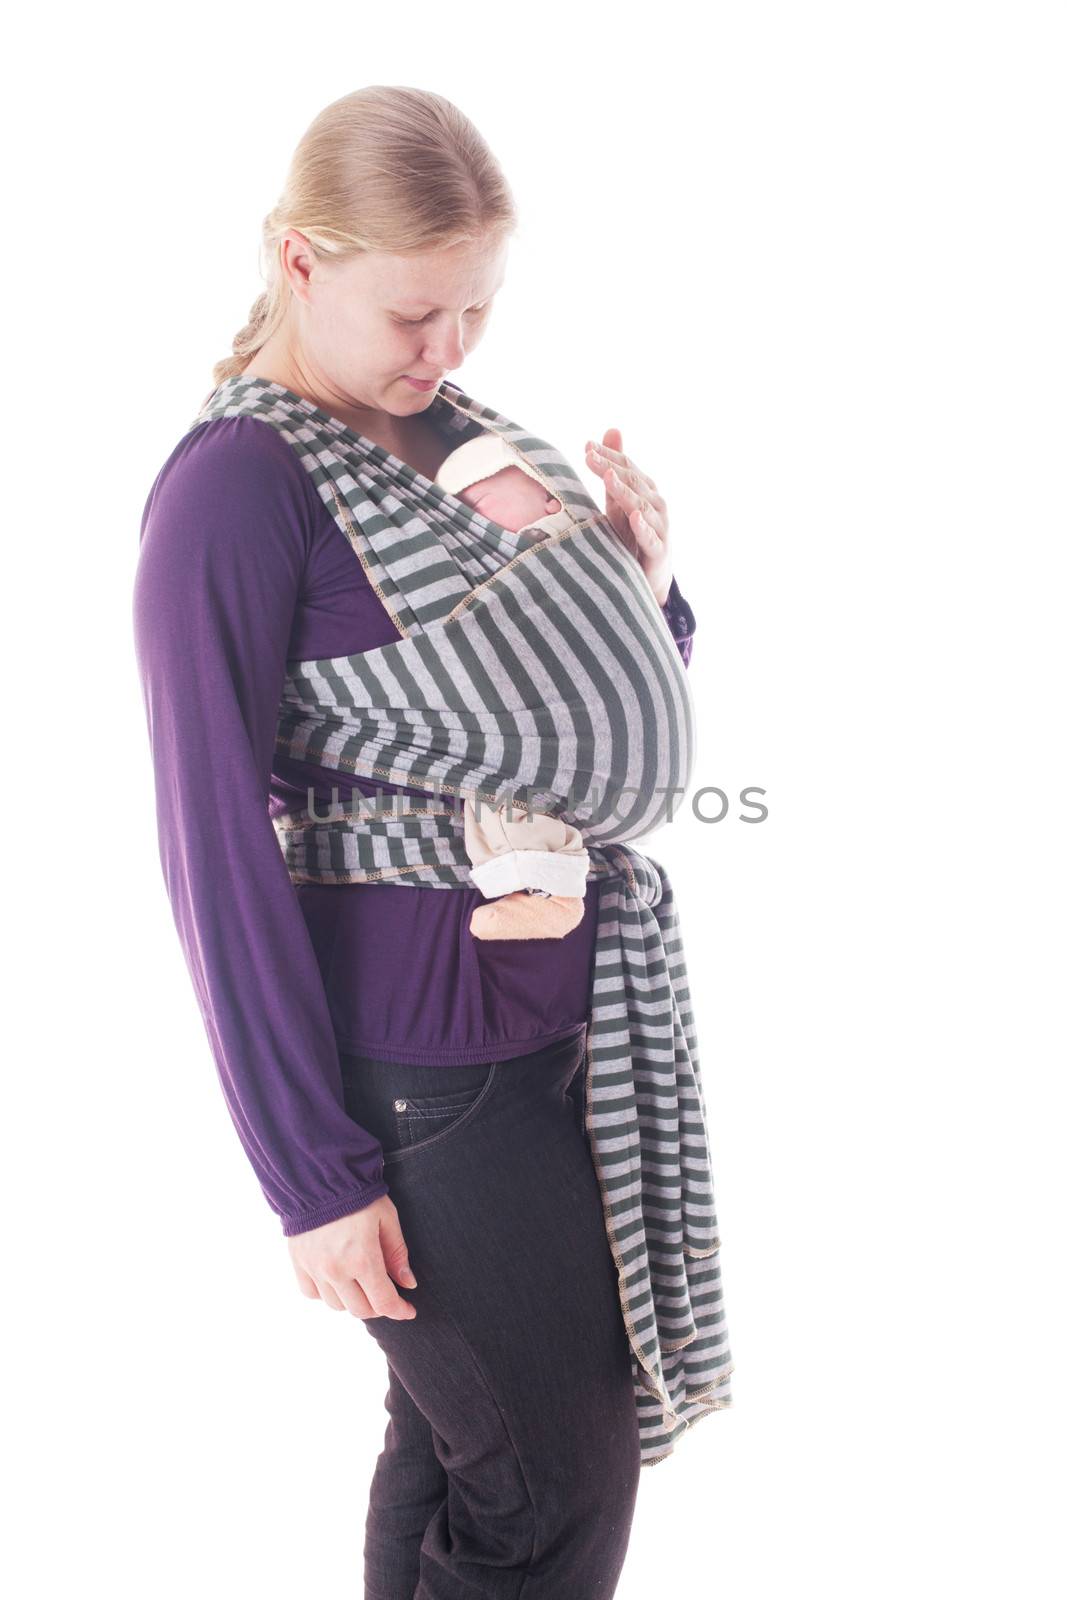 Newborn baby in sling by oksix